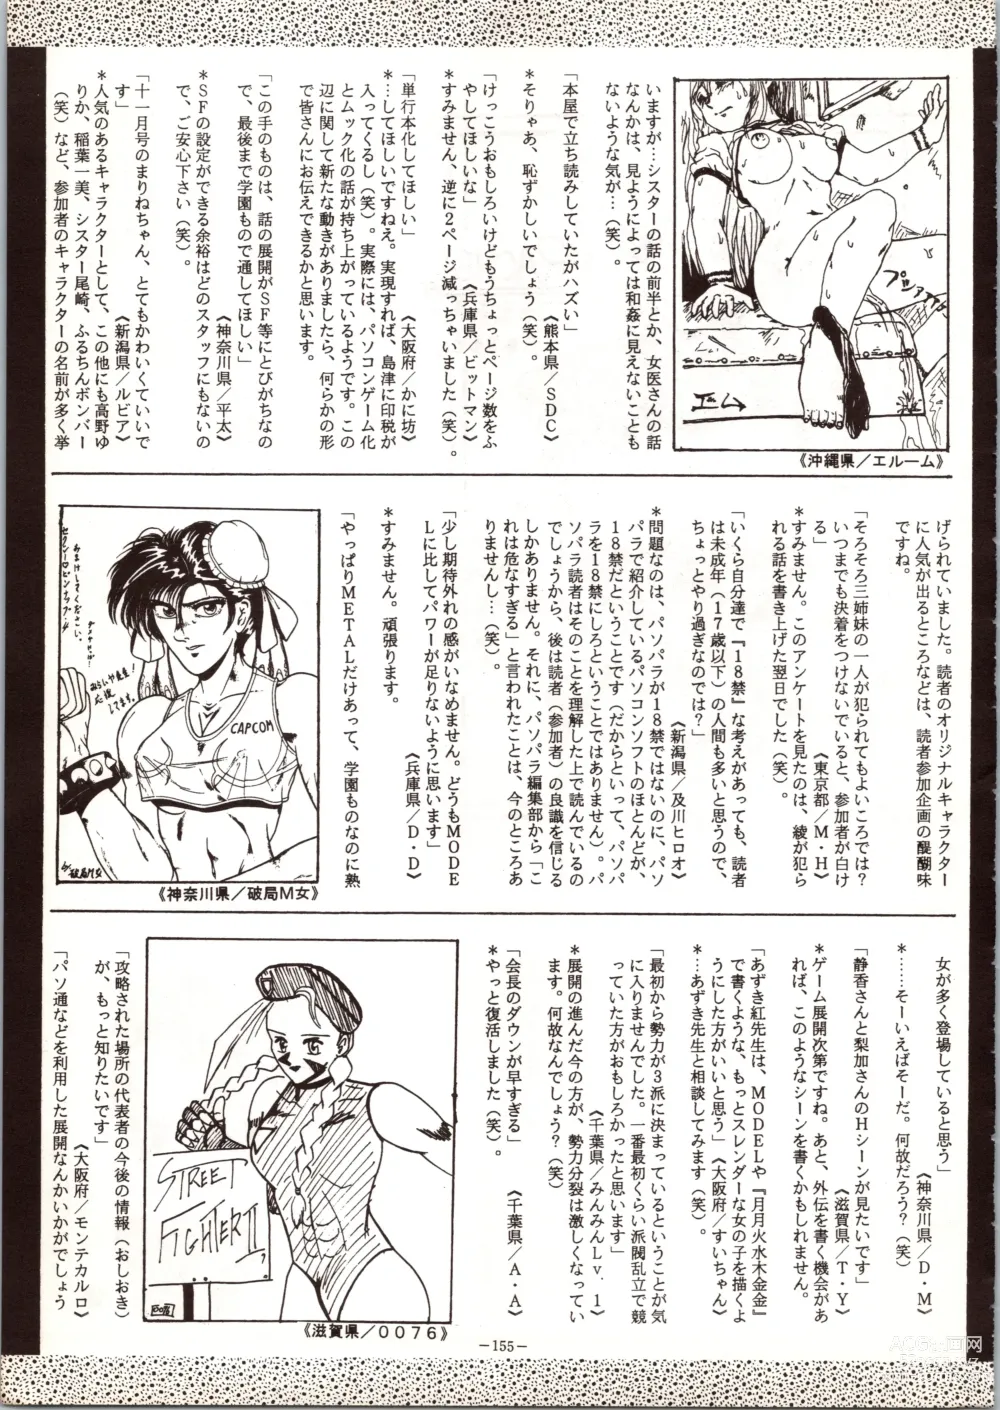 Page 155 of doujinshi MODEL 5